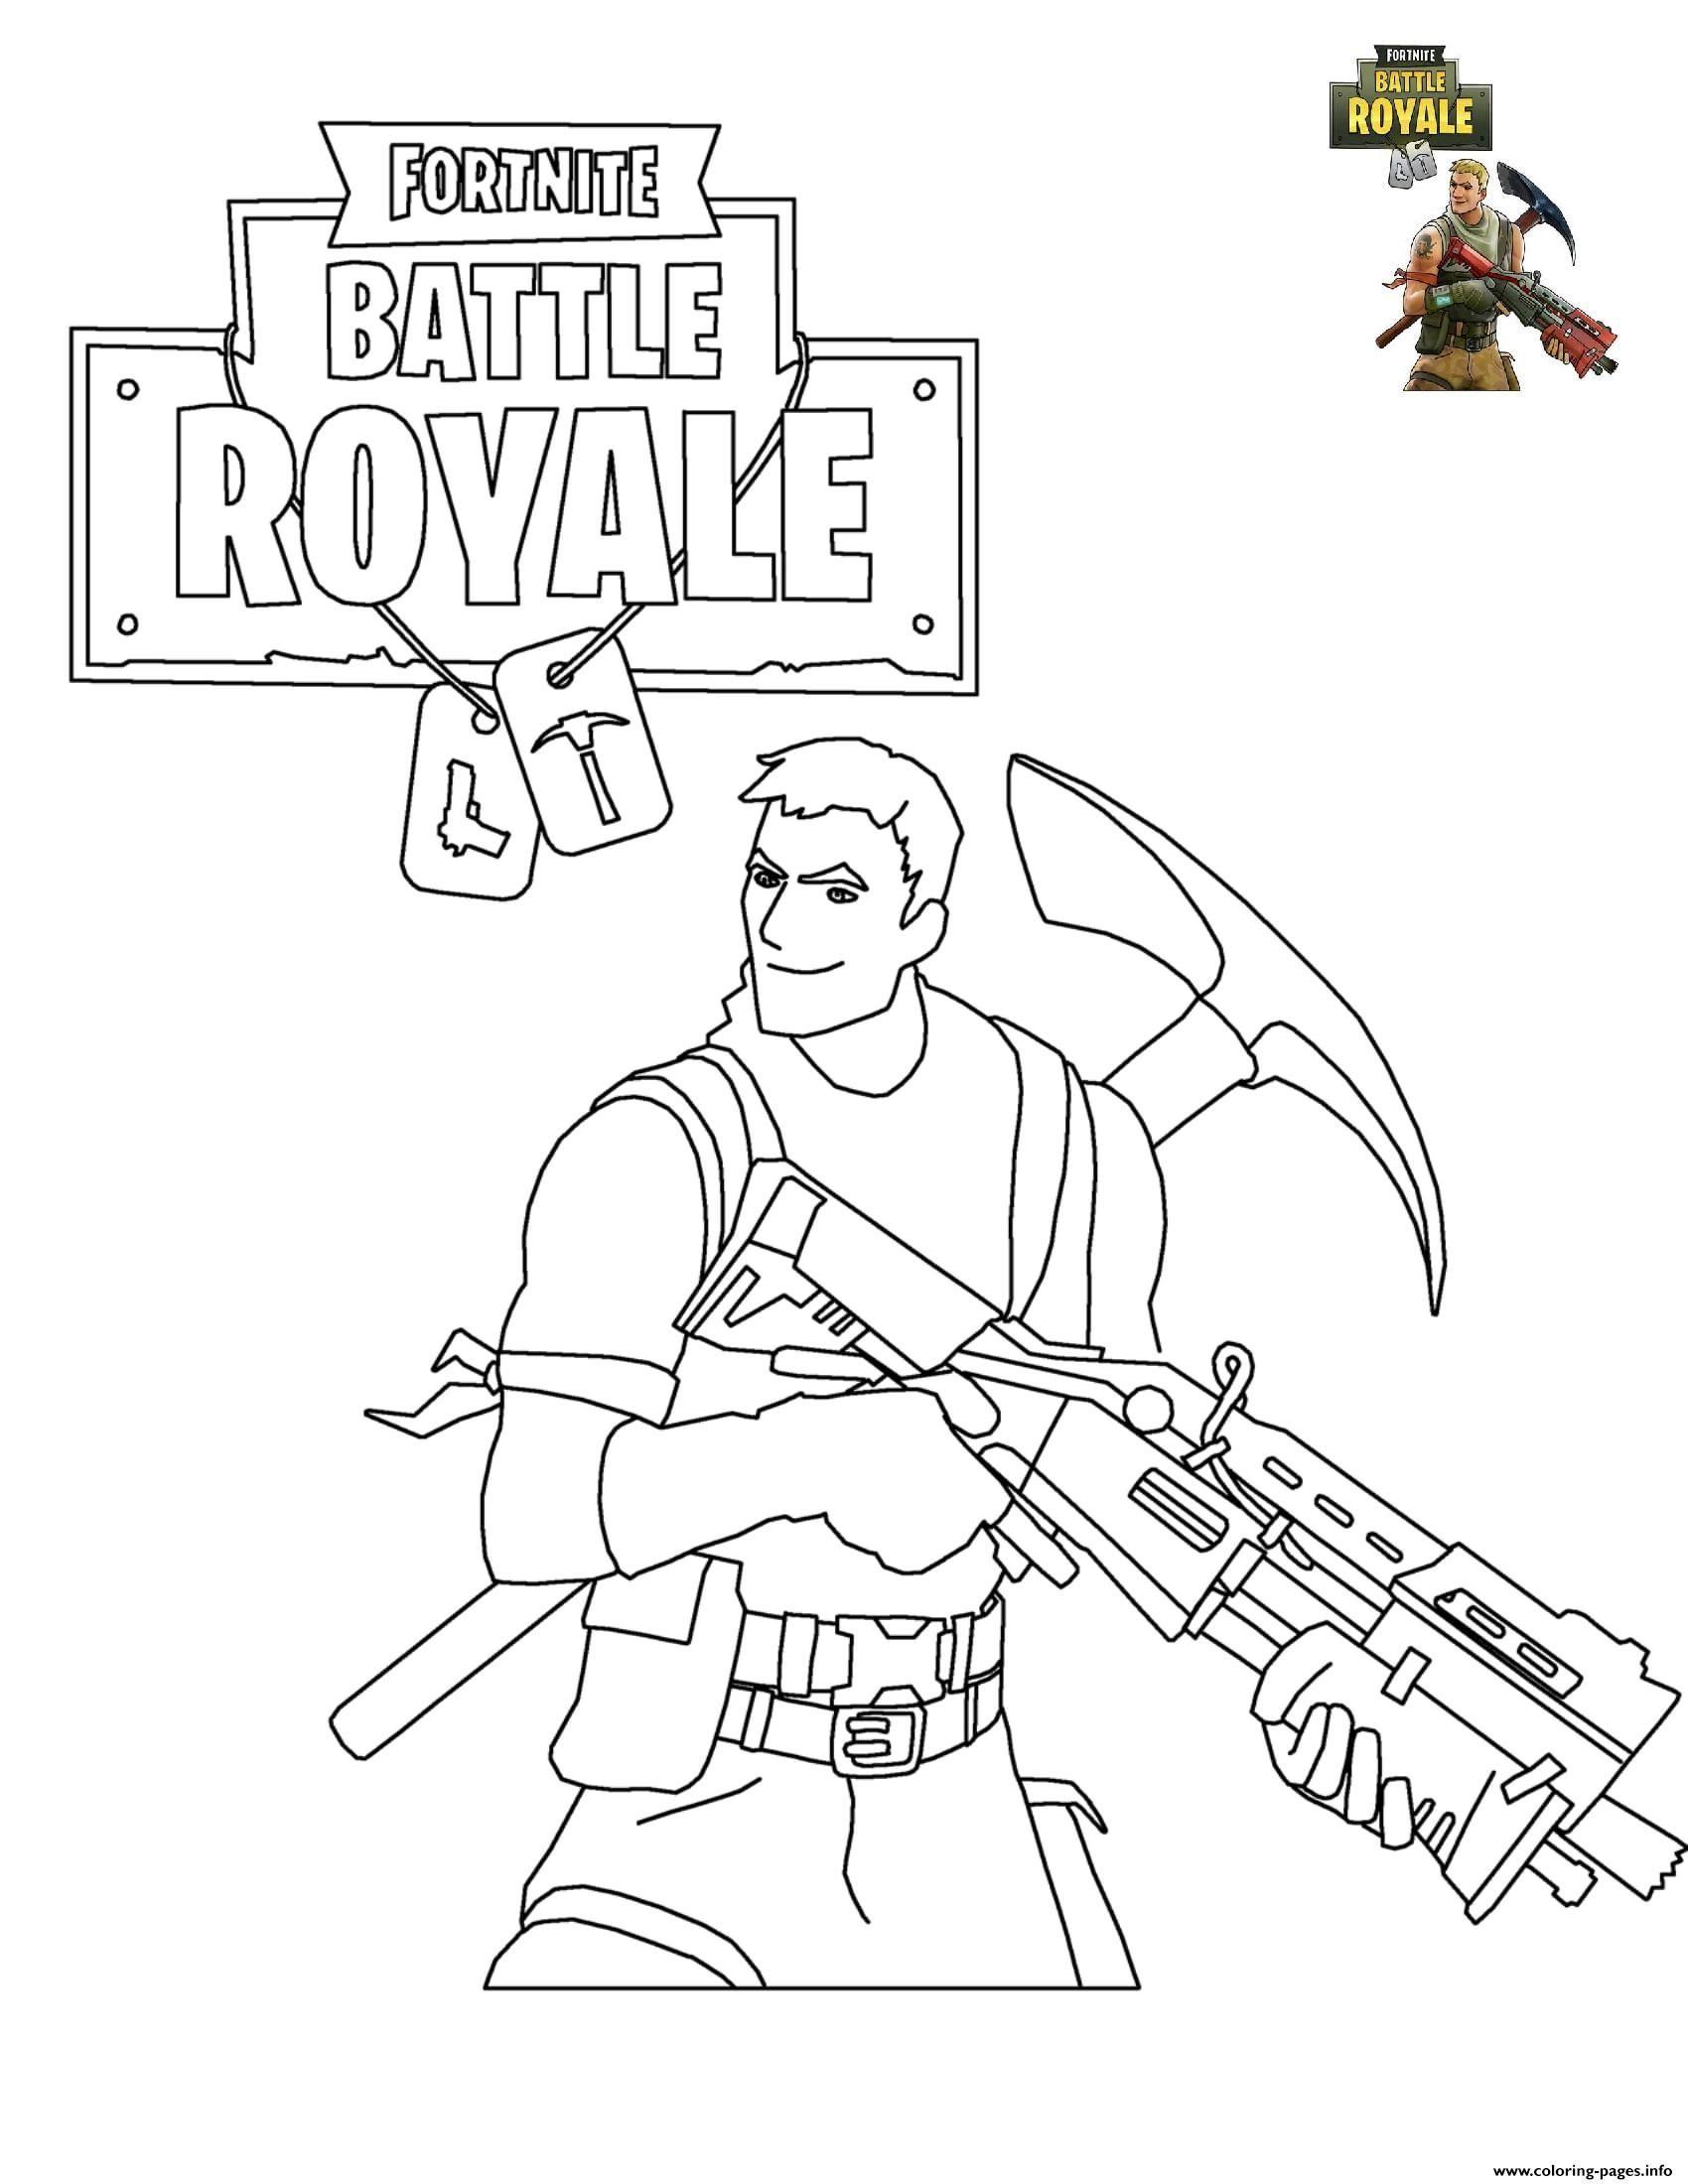 Coloring Fortnite Battle Royale Logo - Fortnite Battle Royale coloring pages ... | Fortnite Party ...